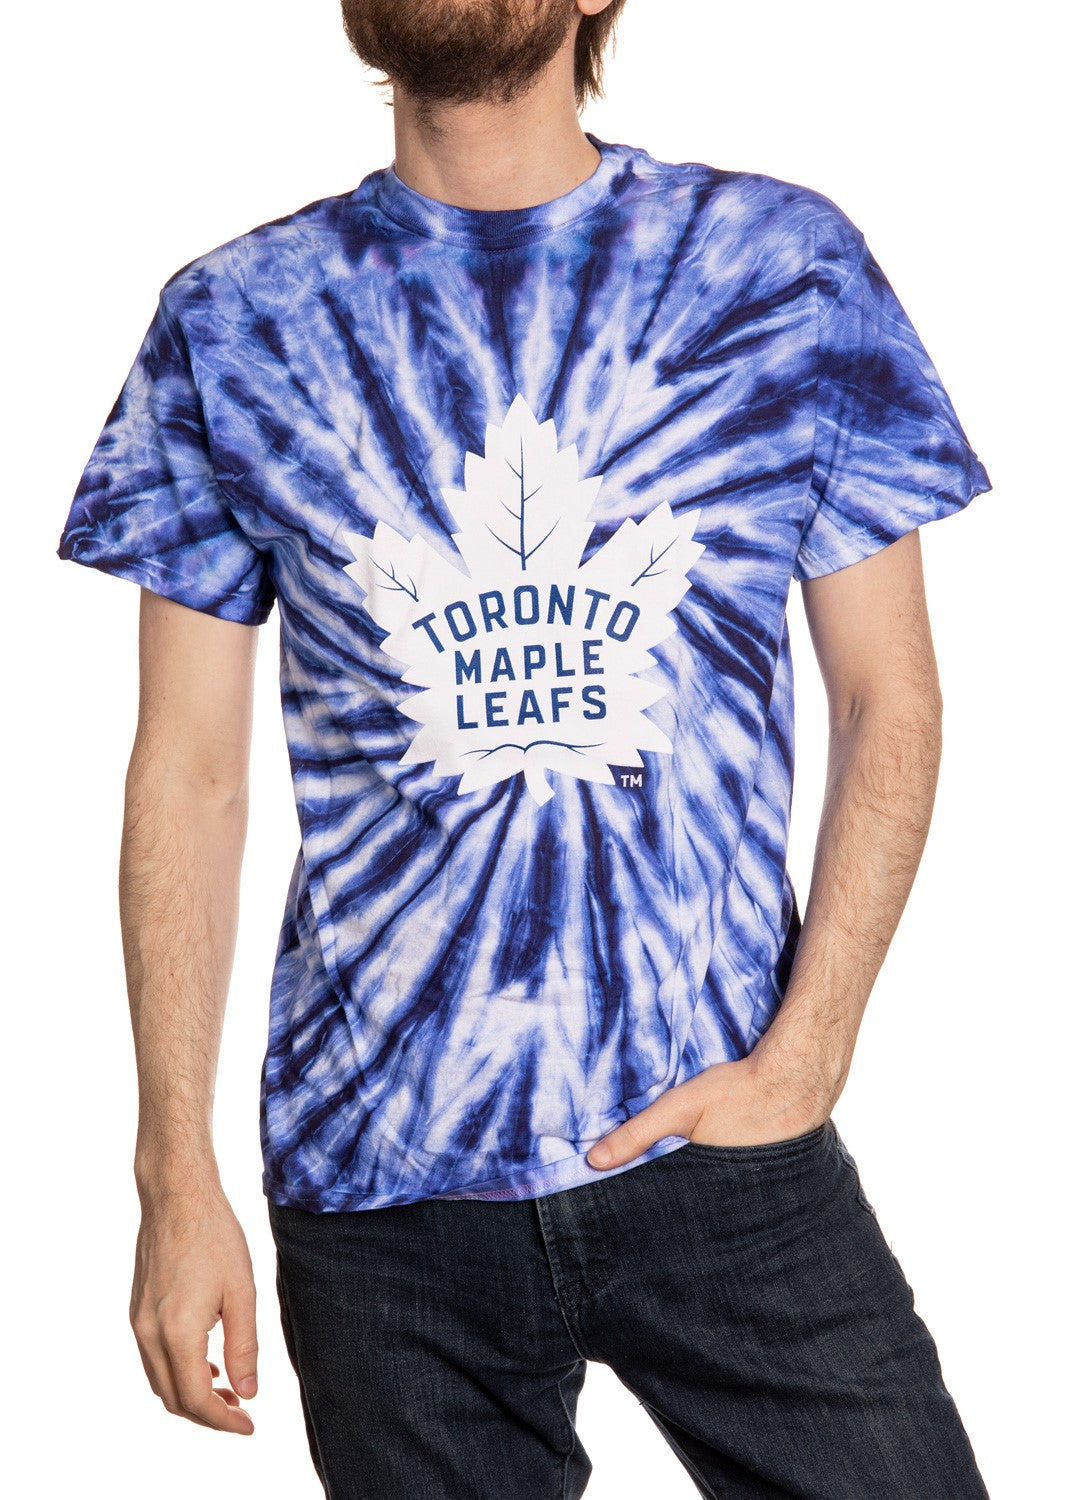 Toronto Maple Leafs Spiral Tie Dye T-Shirt